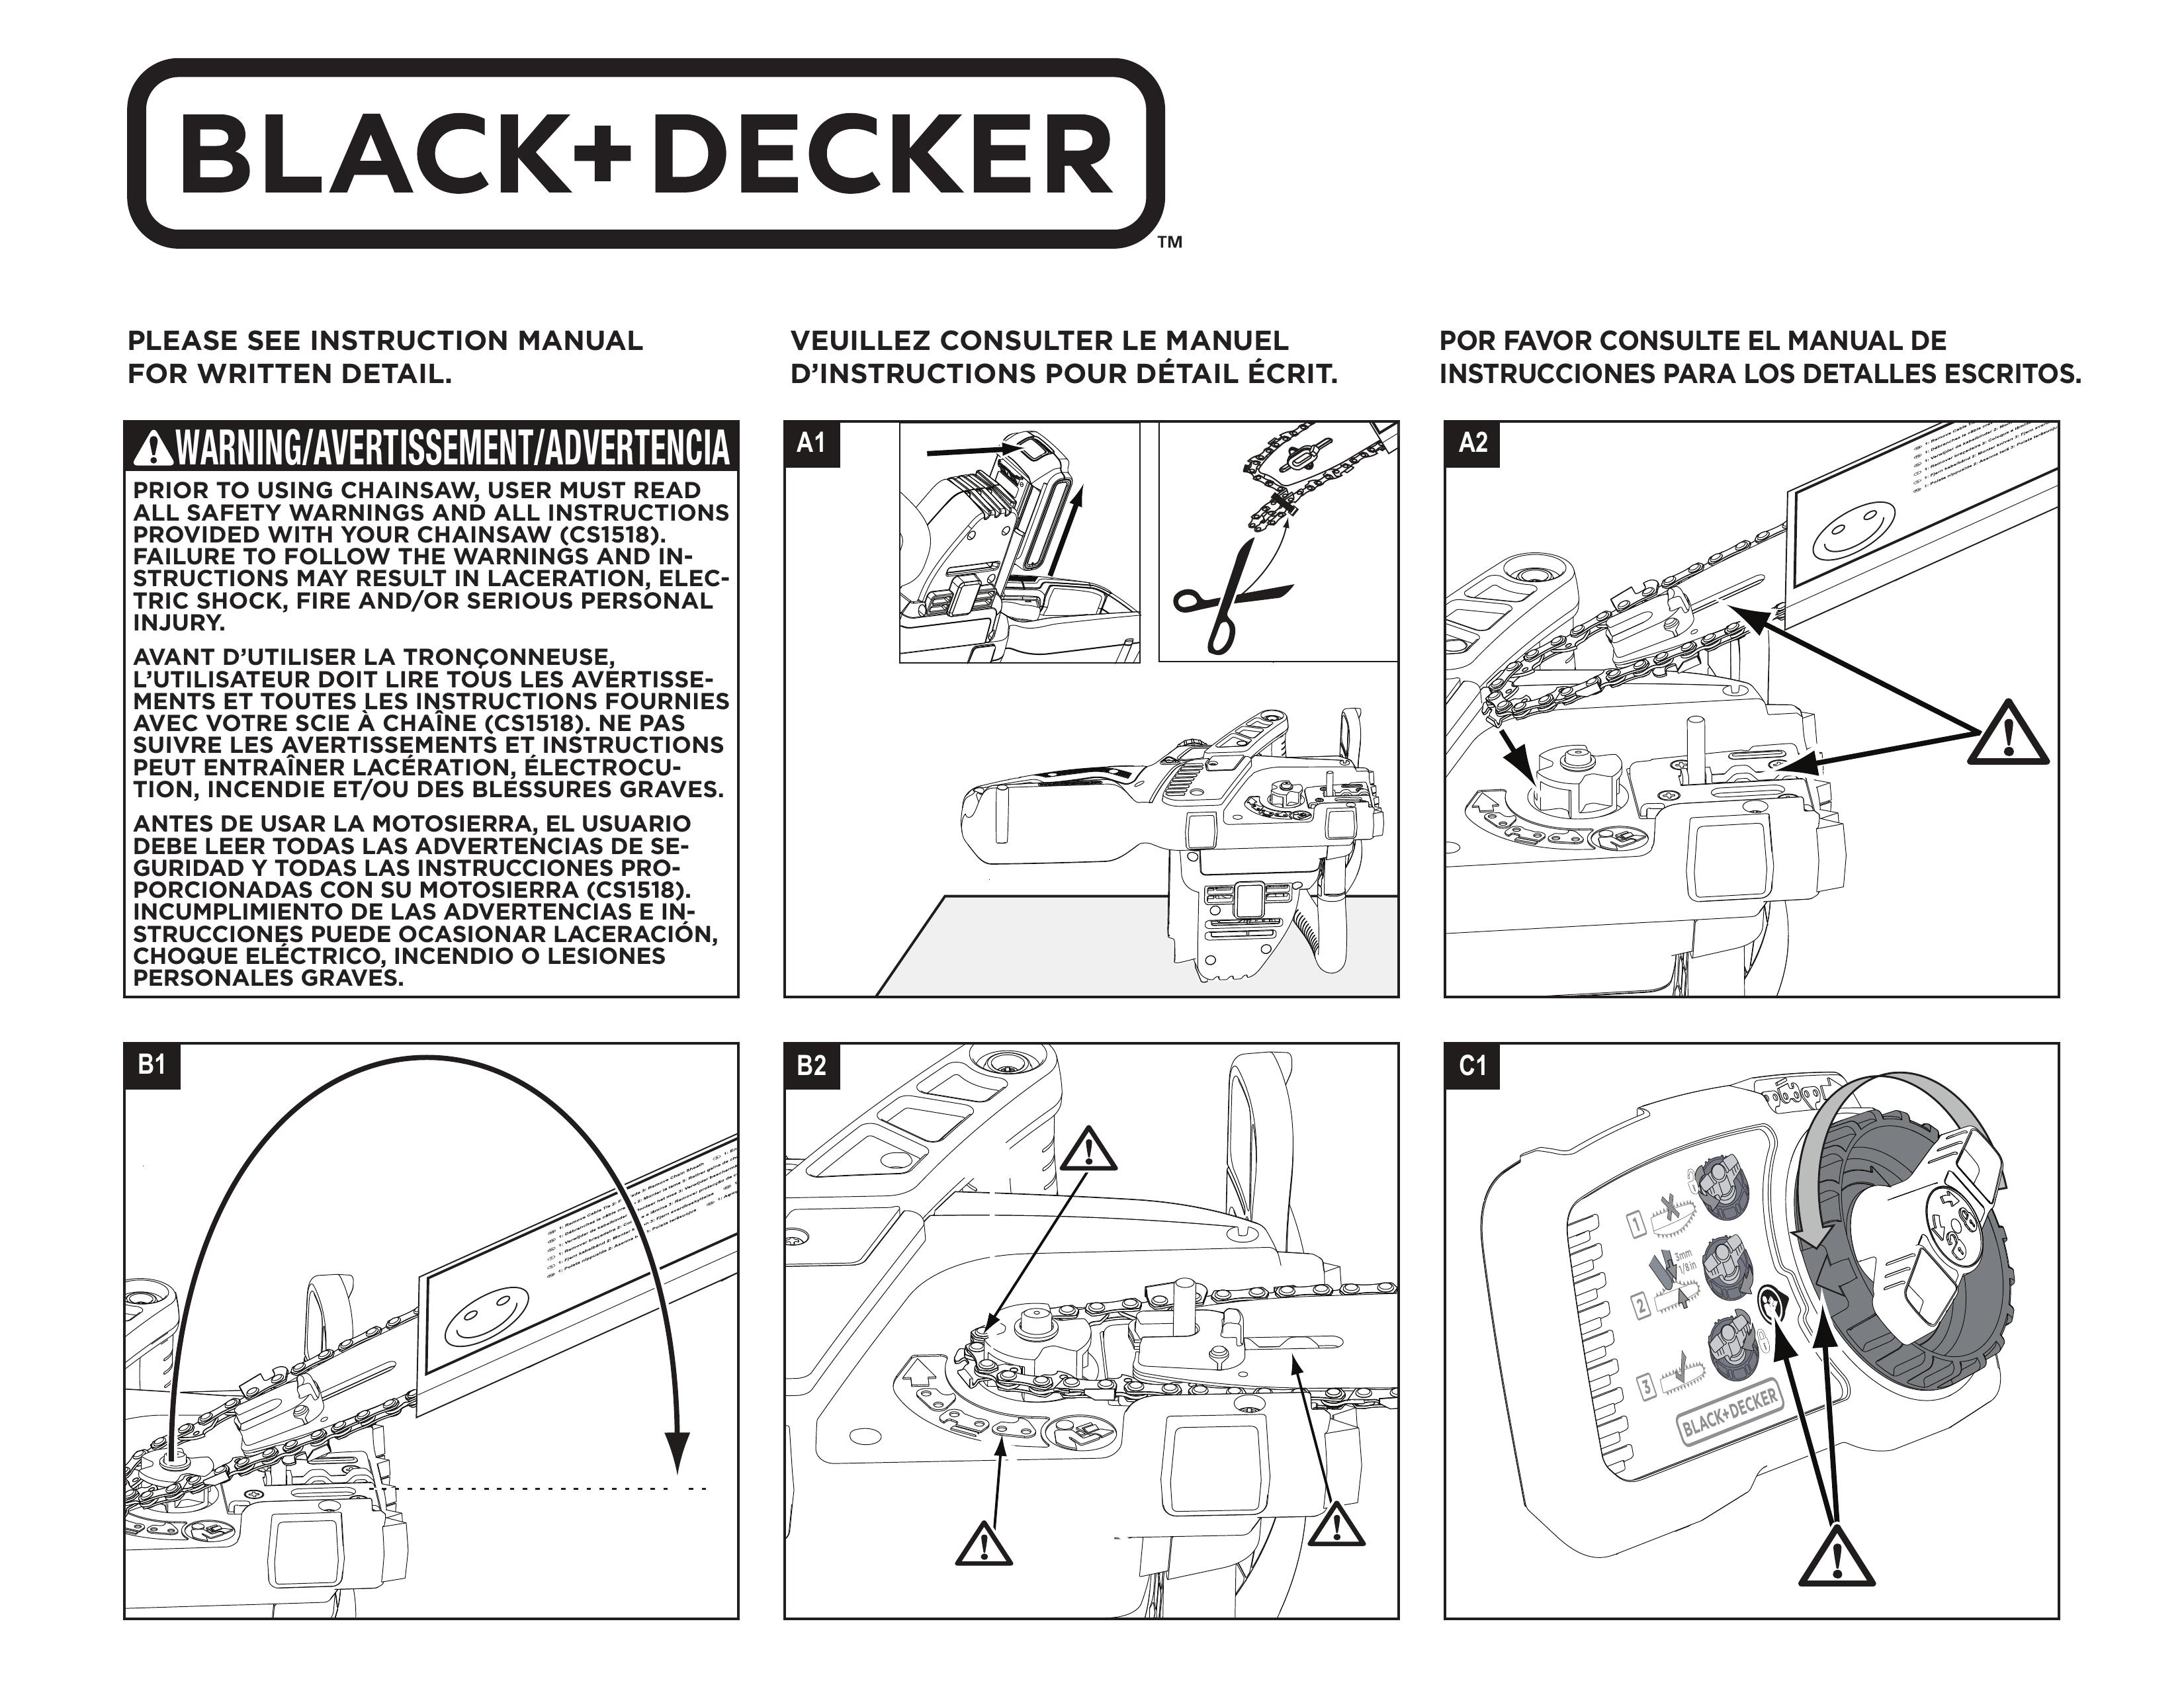 Black & Decker LCS1020 Brush Cutter User Manual